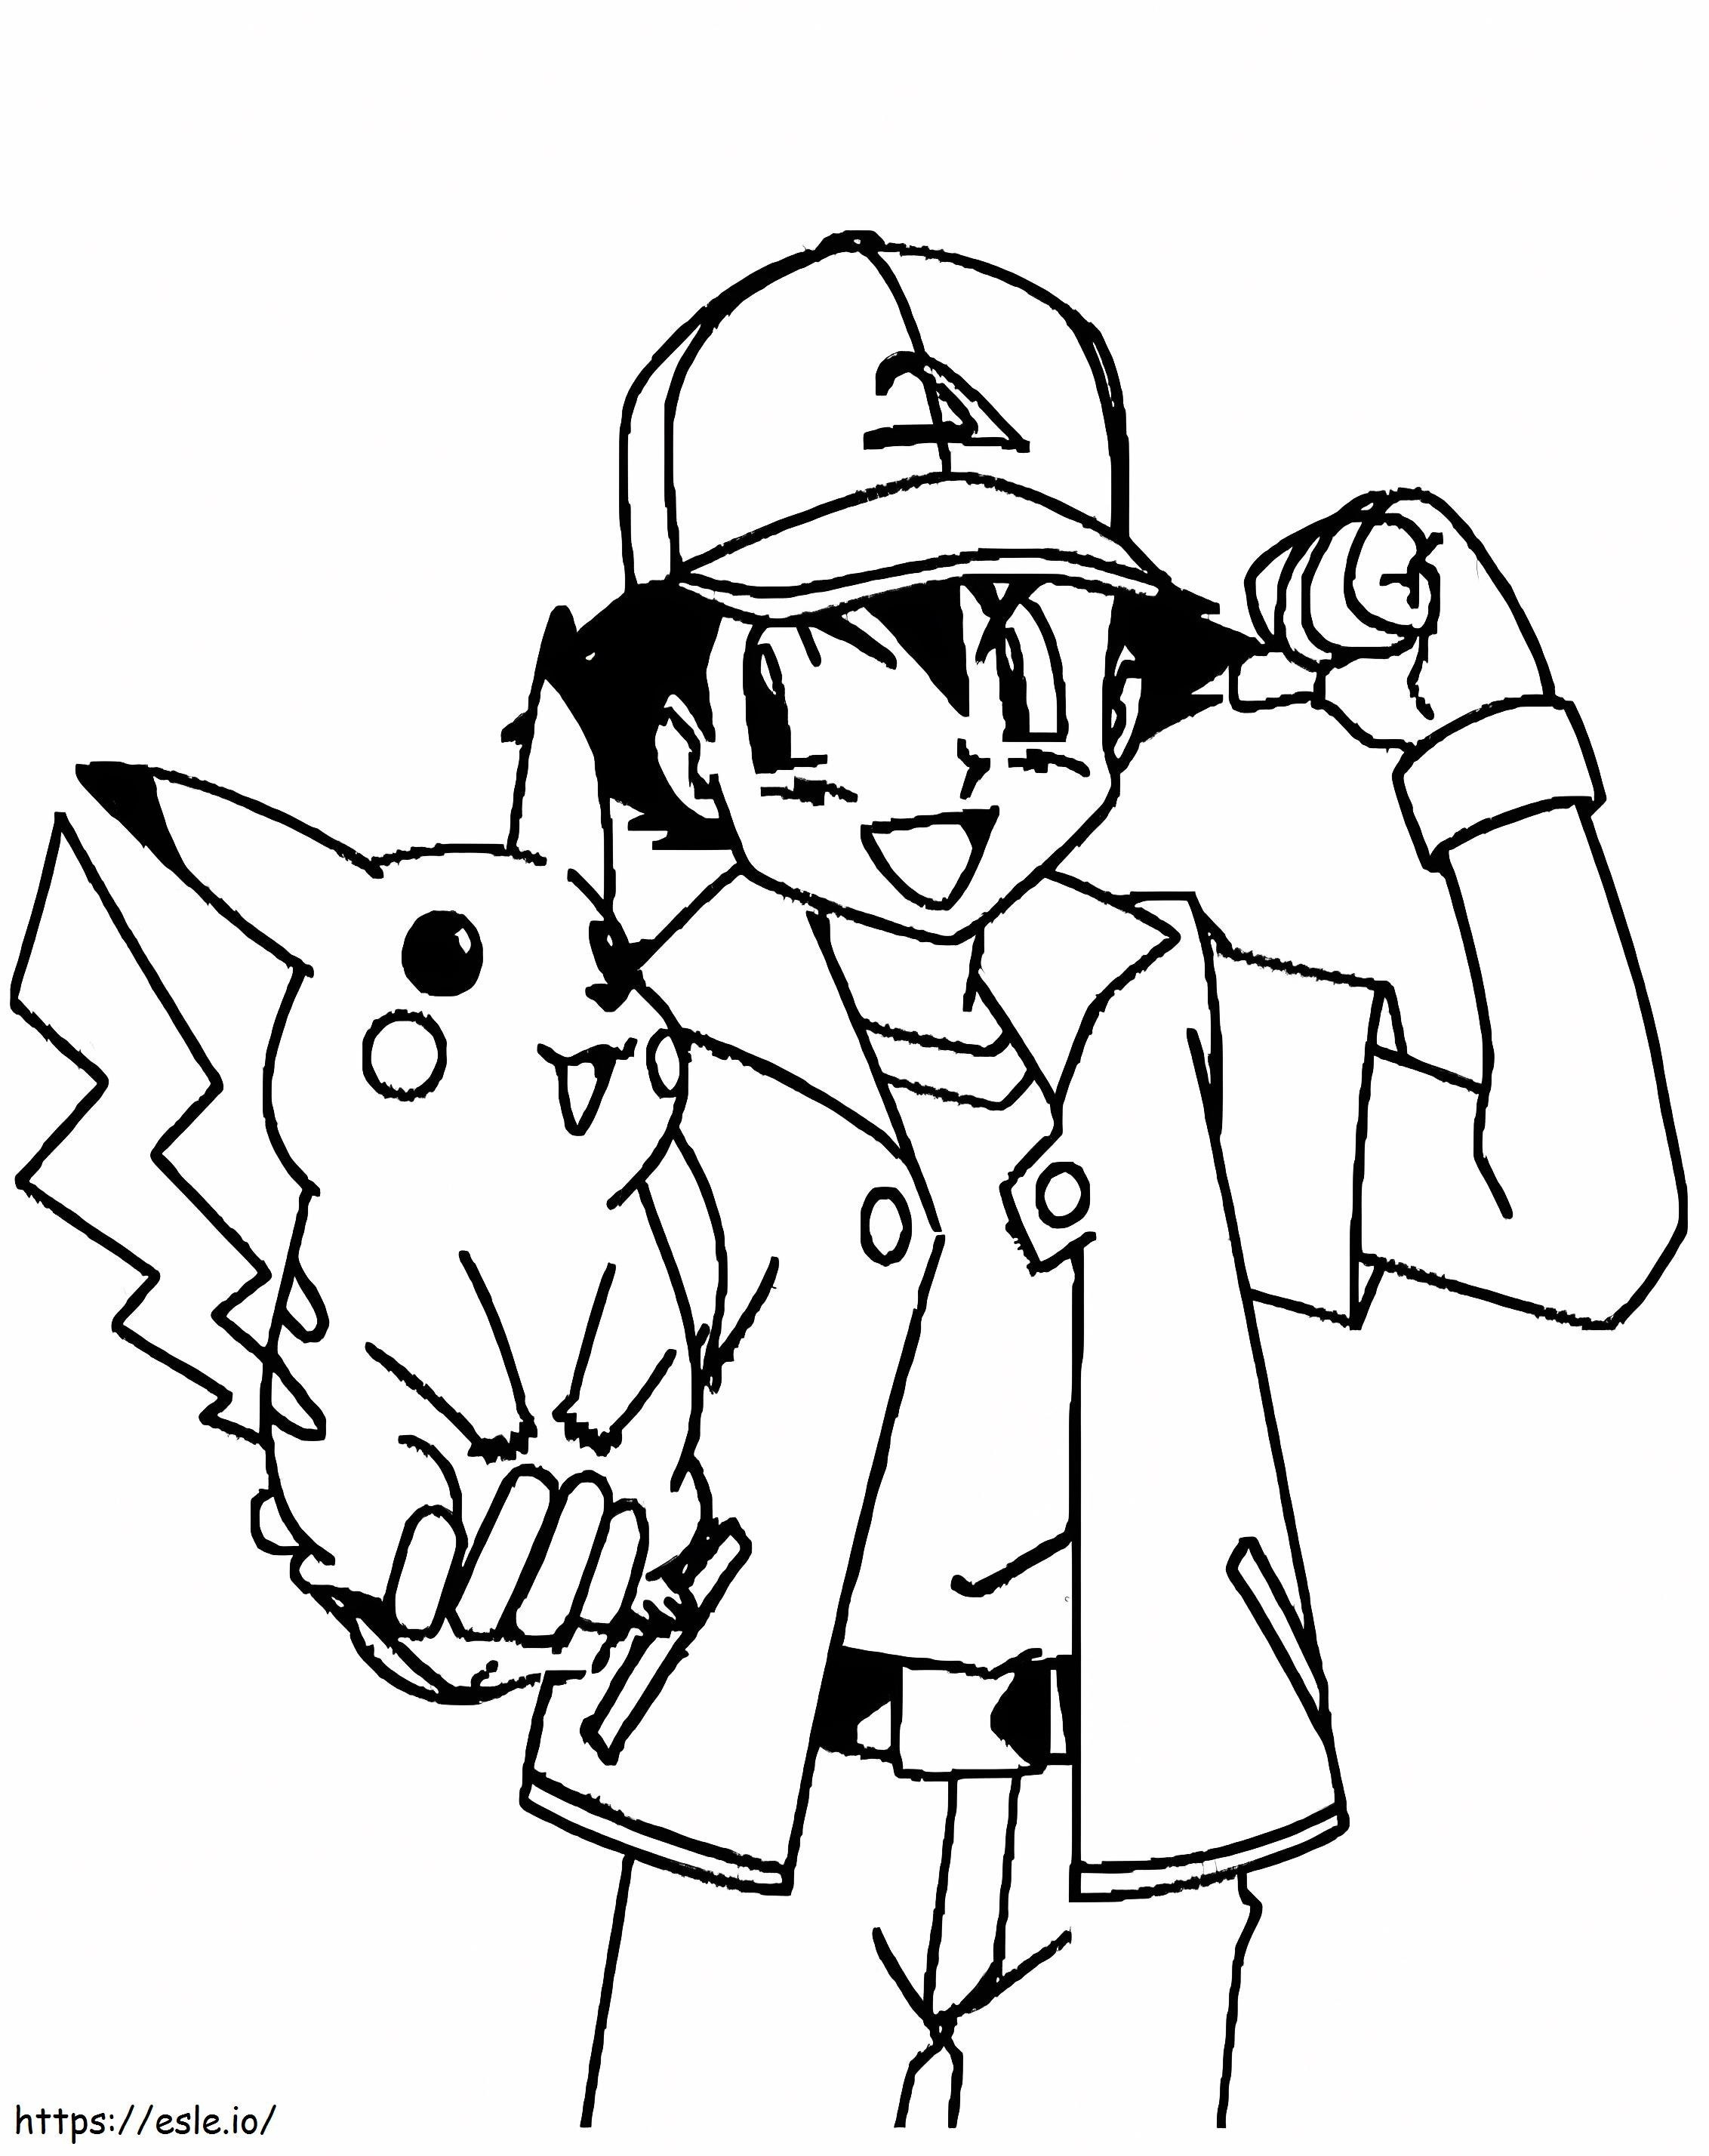 Ash Ketchum Holding Pikachu coloring page